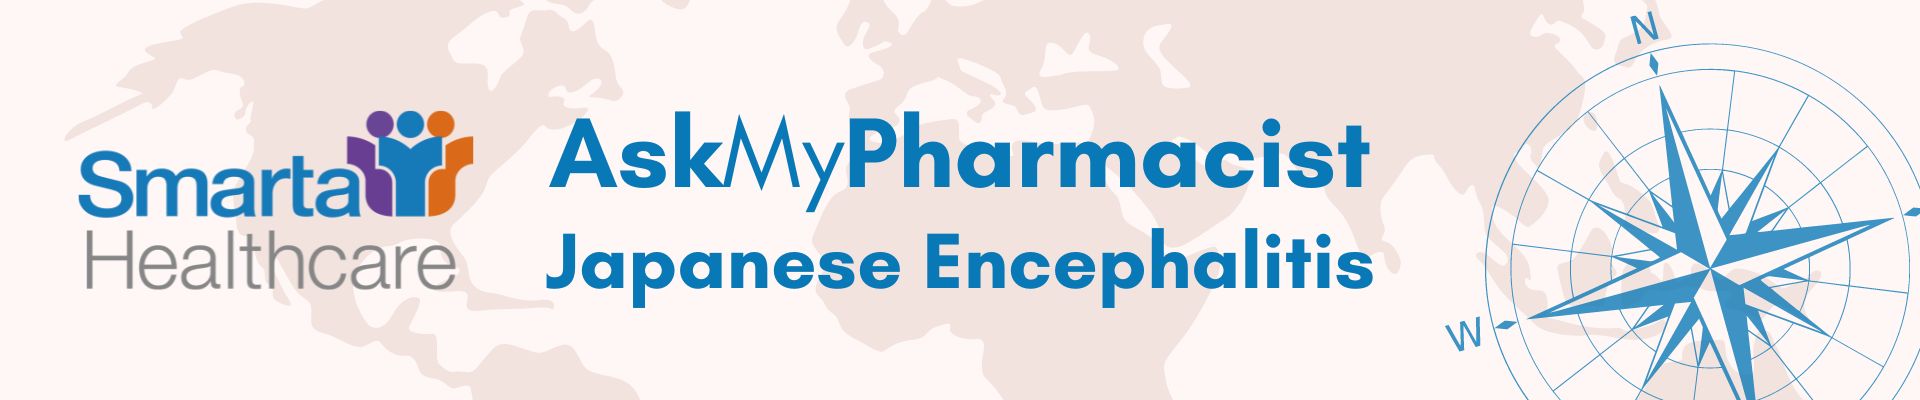 Smarta Healthcare AskMyPharmacist FAQs Japanese Encephalitis Vaccine